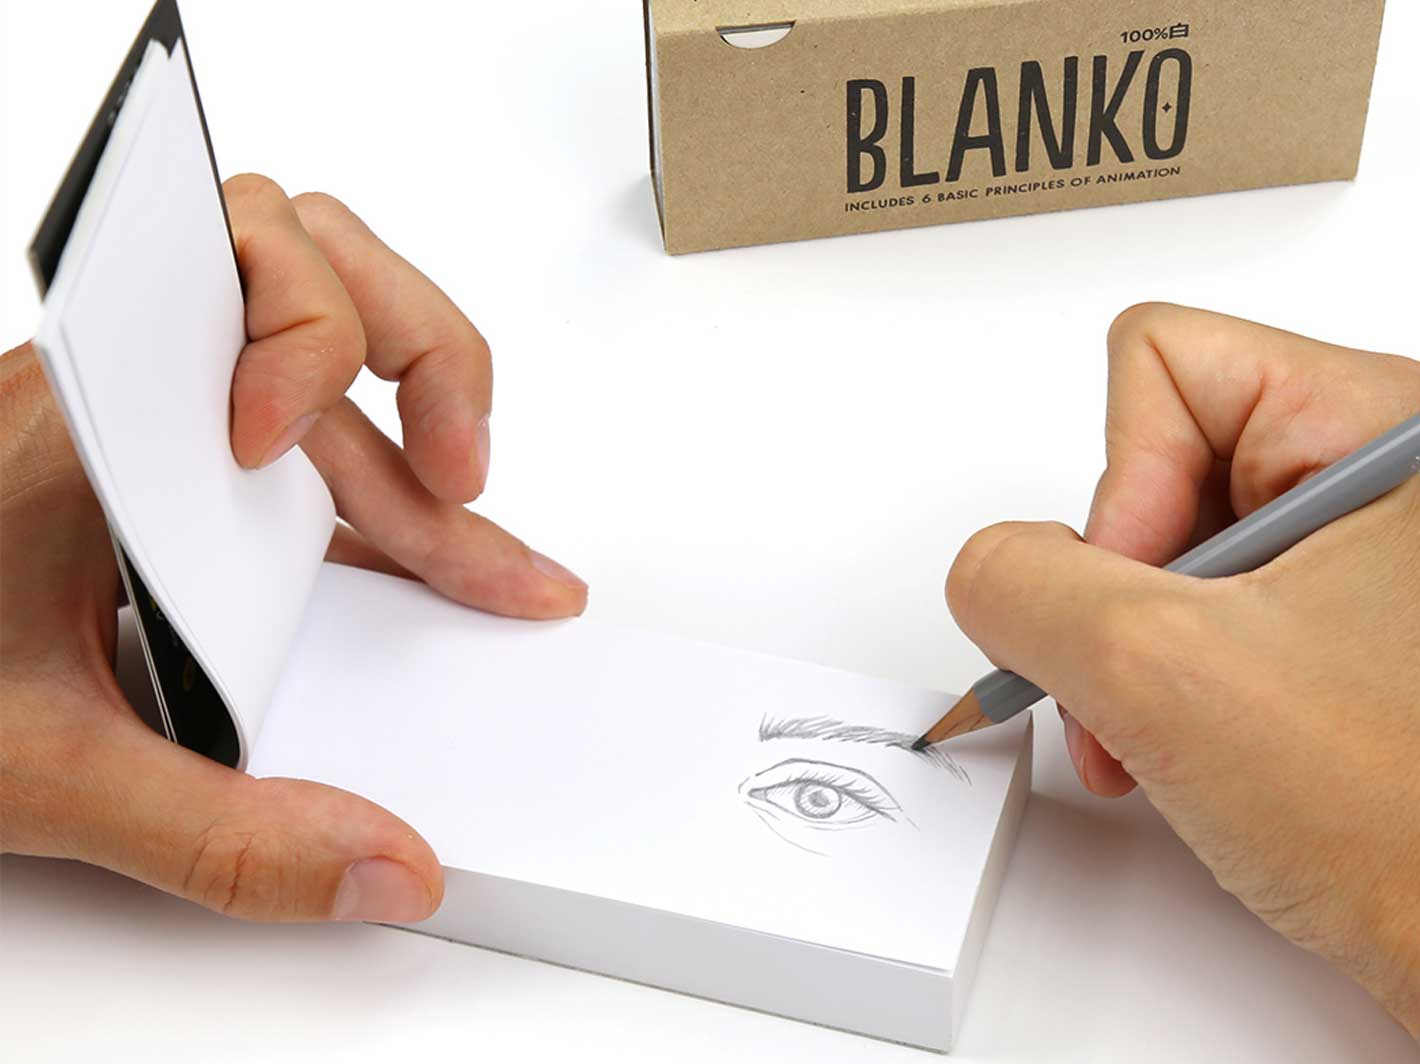 The Blanko Flipbook